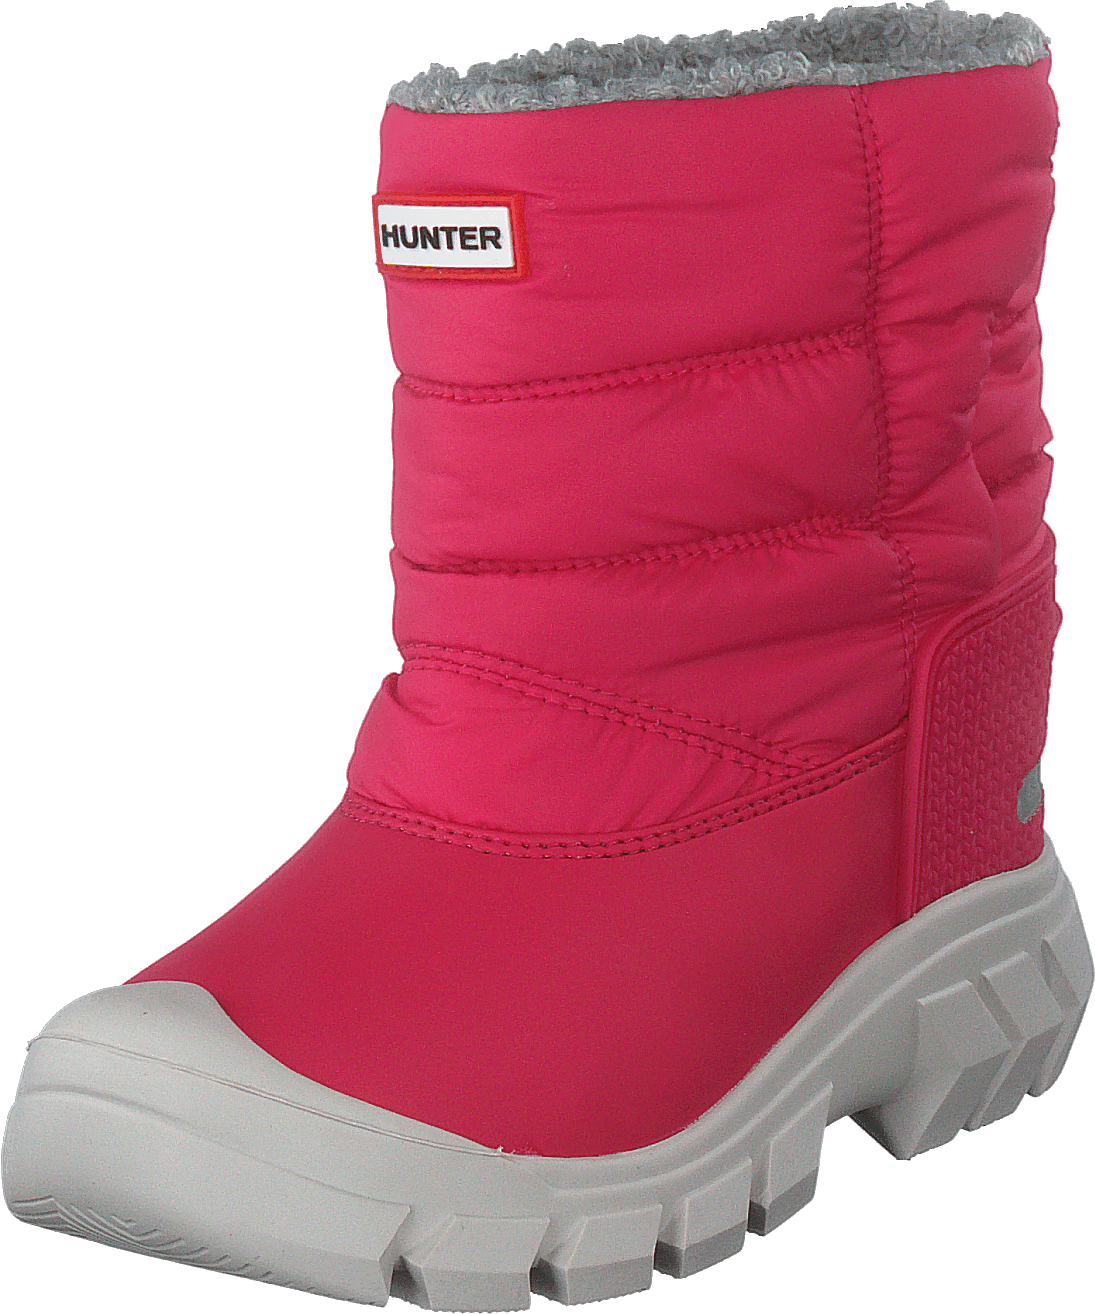 Original Kids Snow Boot Bright Pink